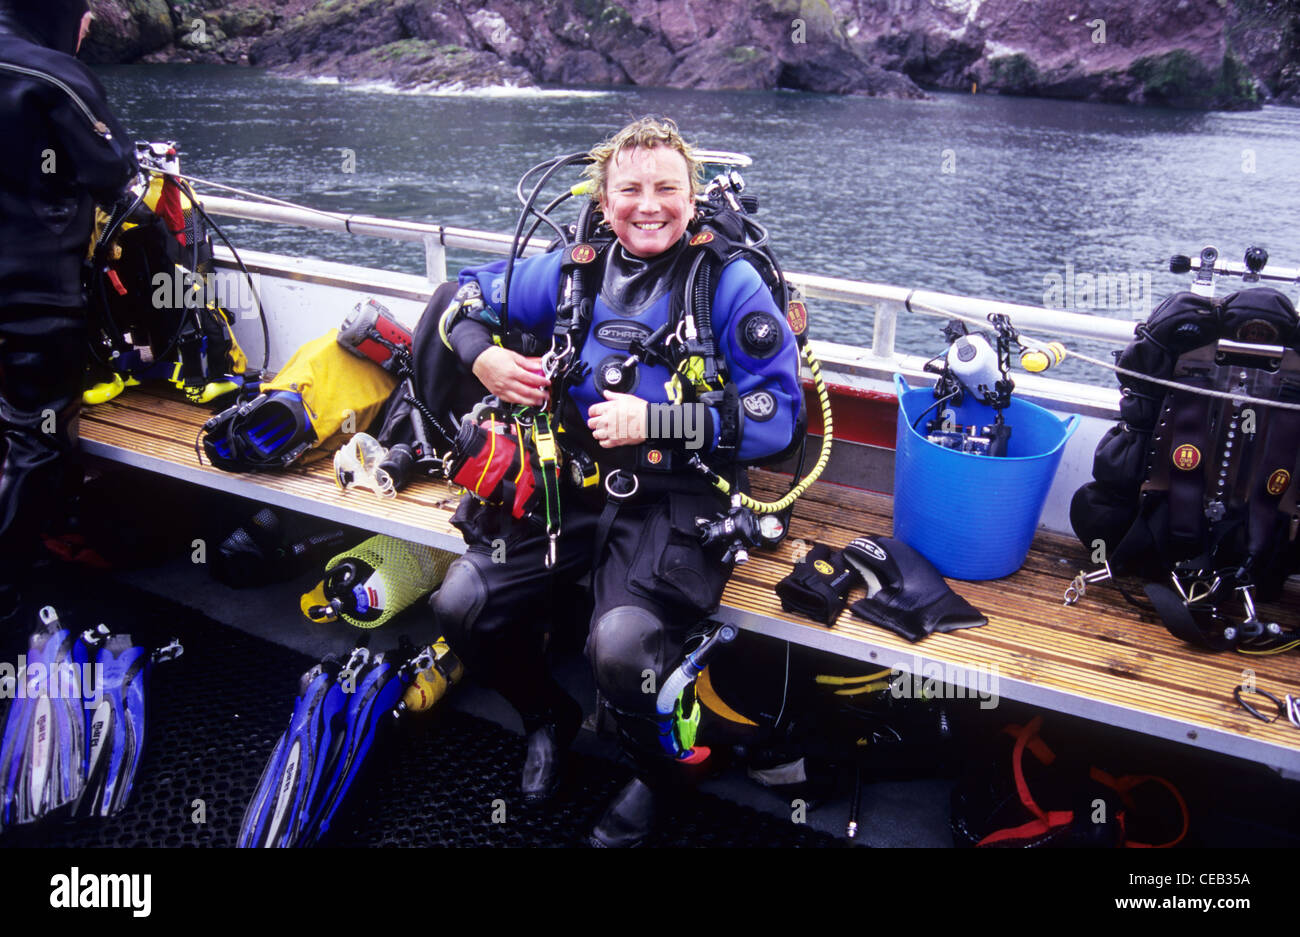 Scuba diver aboard dive boat Wavedancer out of St Abbs. Scotland. Very happy scuba diver de-kitting following a great dive. Stock Photo